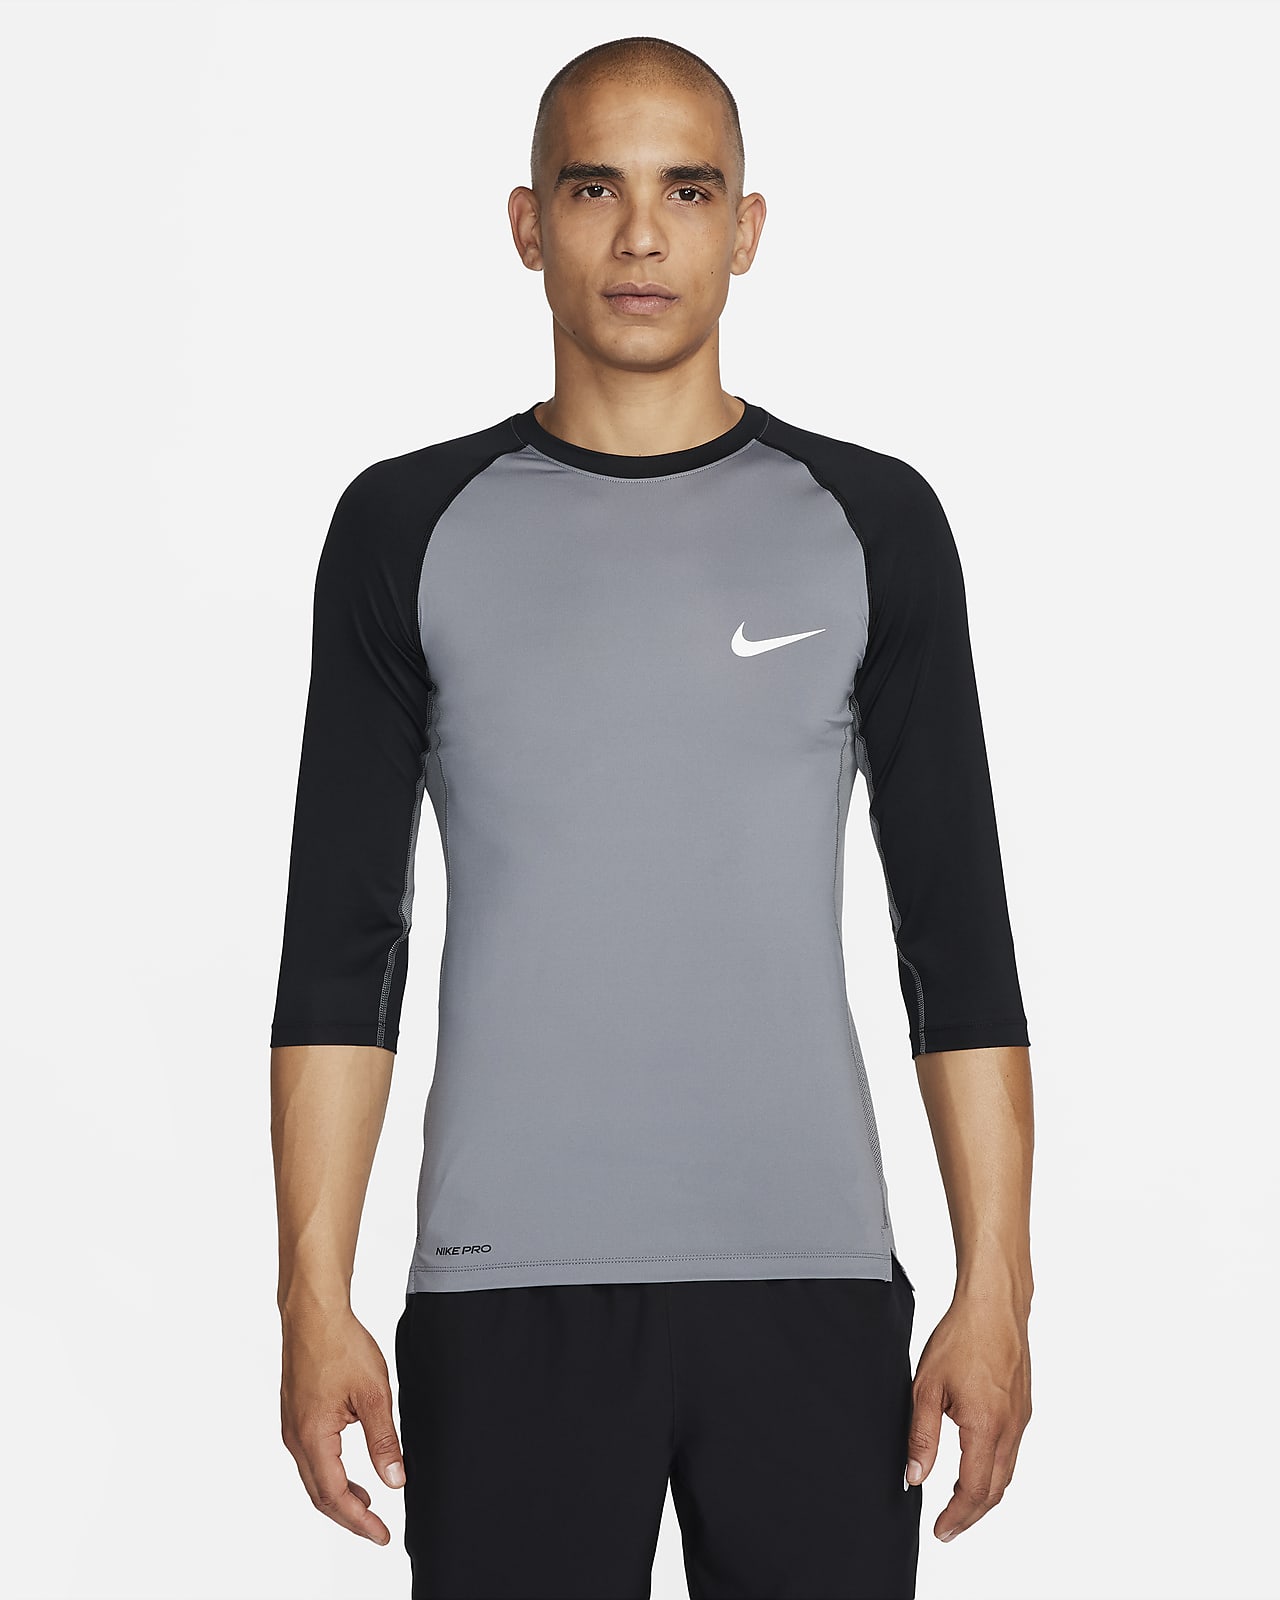 Nike Dri-FIT Men's 3/4-Length Sleeve Baseball Top